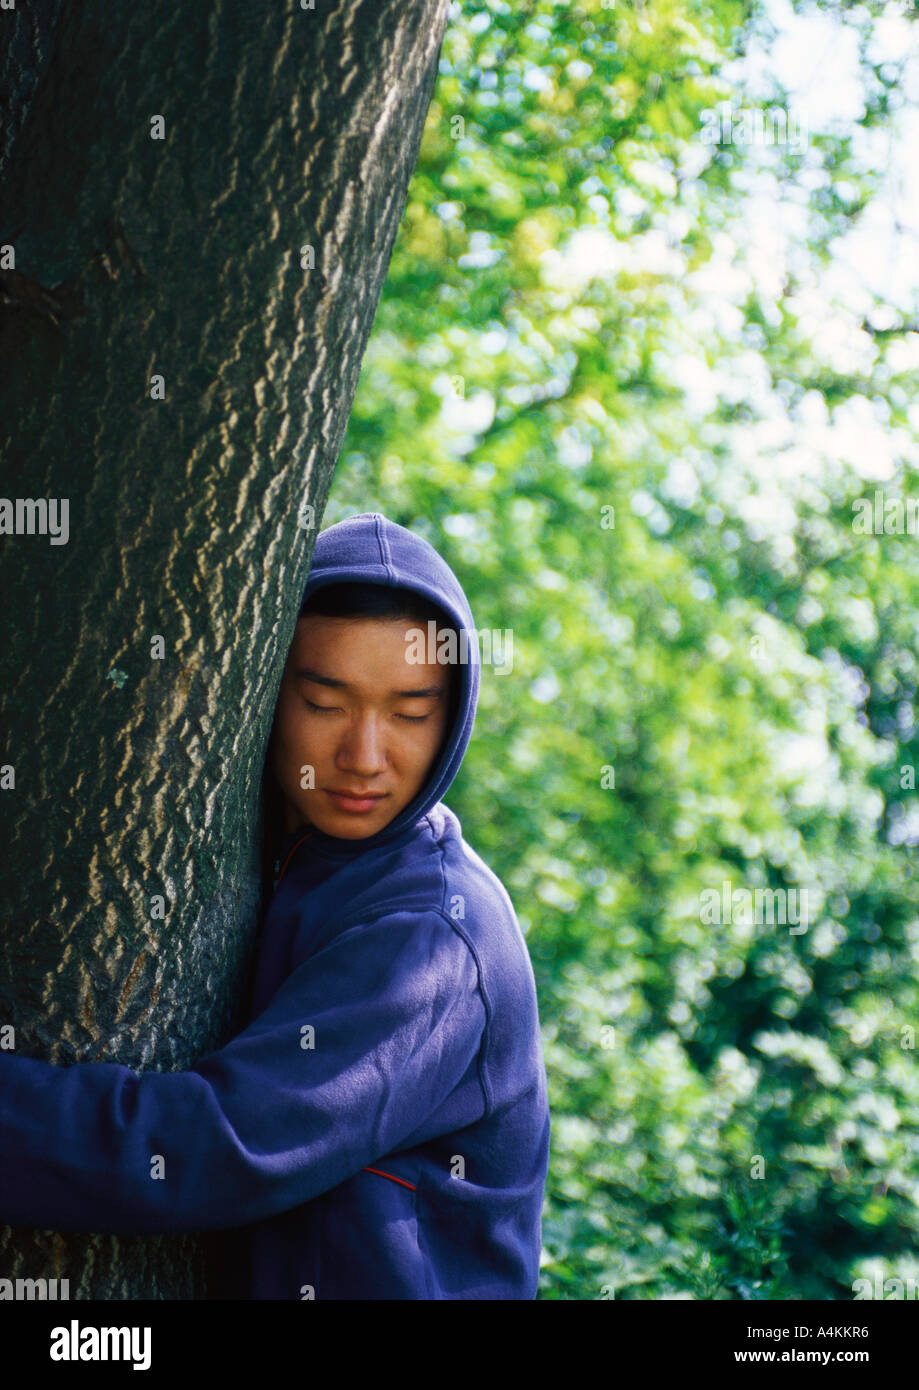 Mann mit Kapuzensweater Baum umarmen Stockfoto